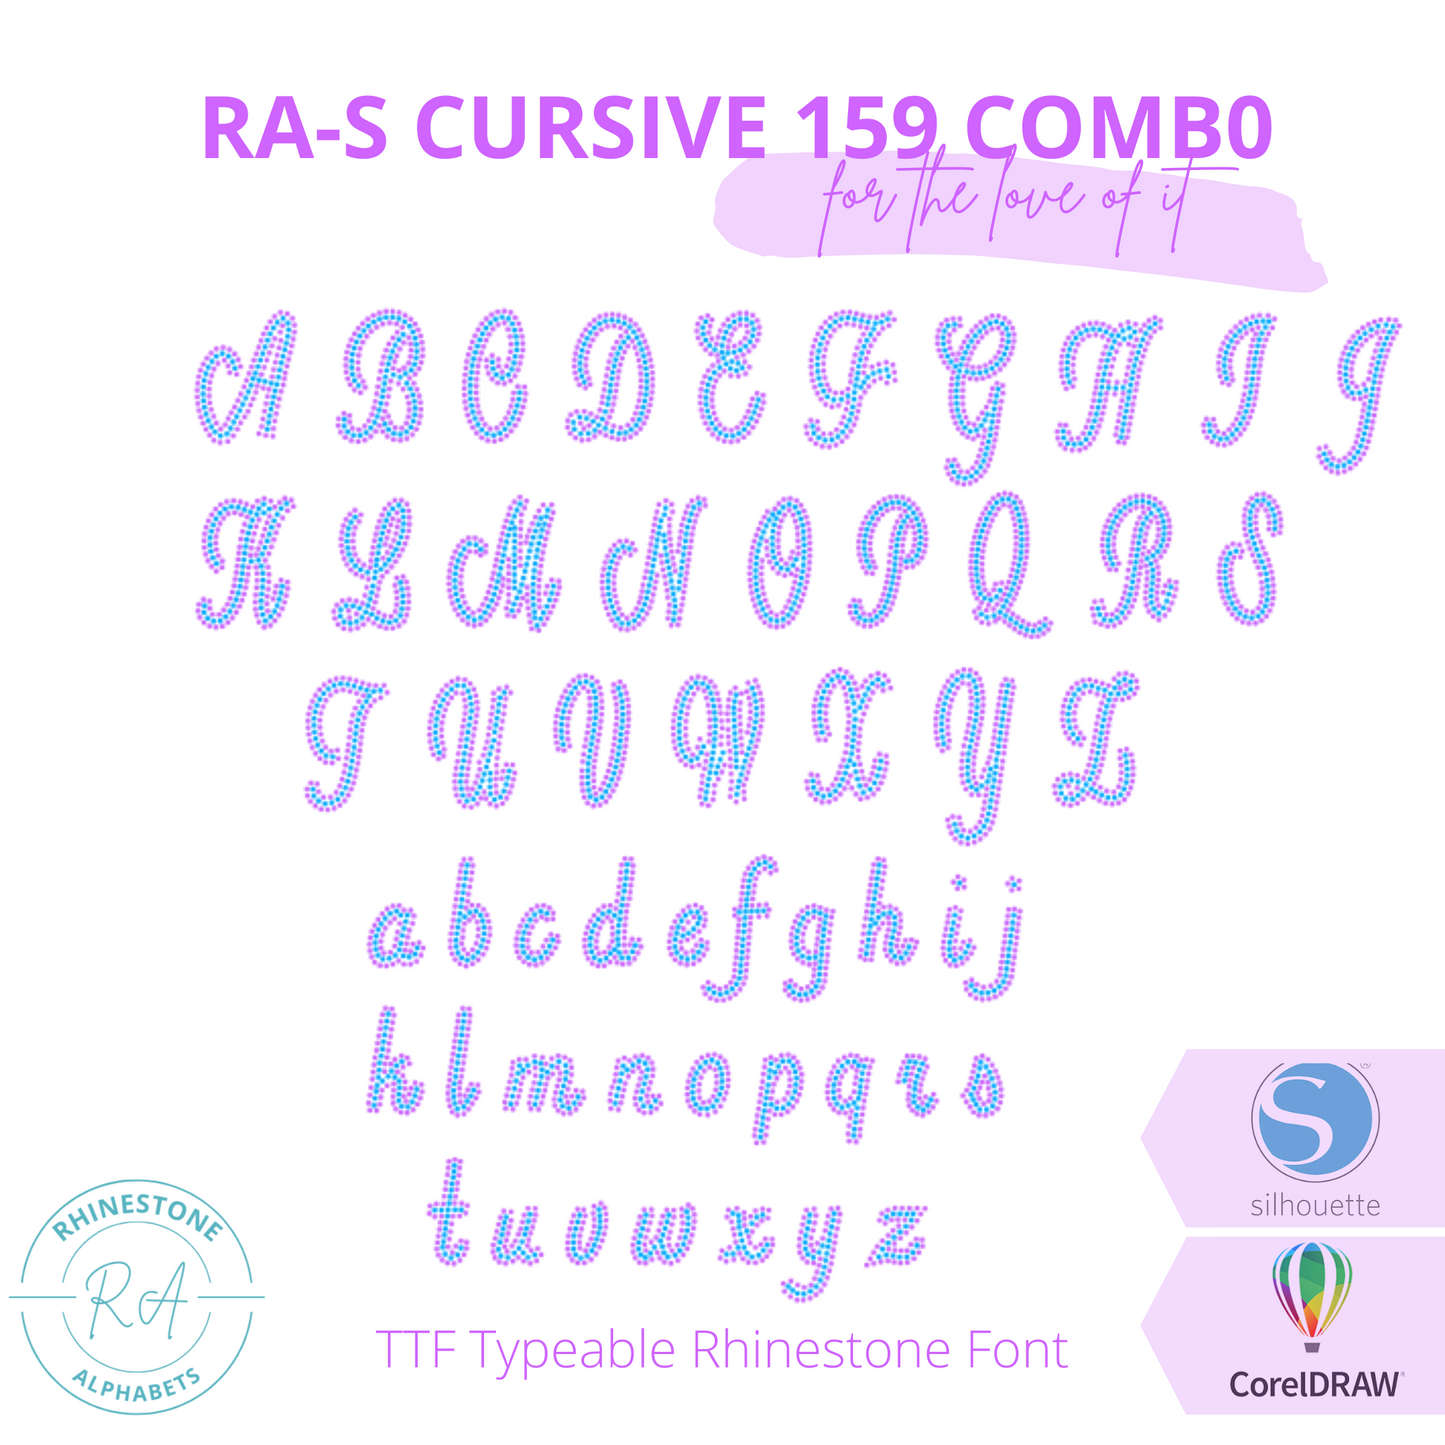 RA-S 159 Cursive Combo - RhinestoneAlphabets